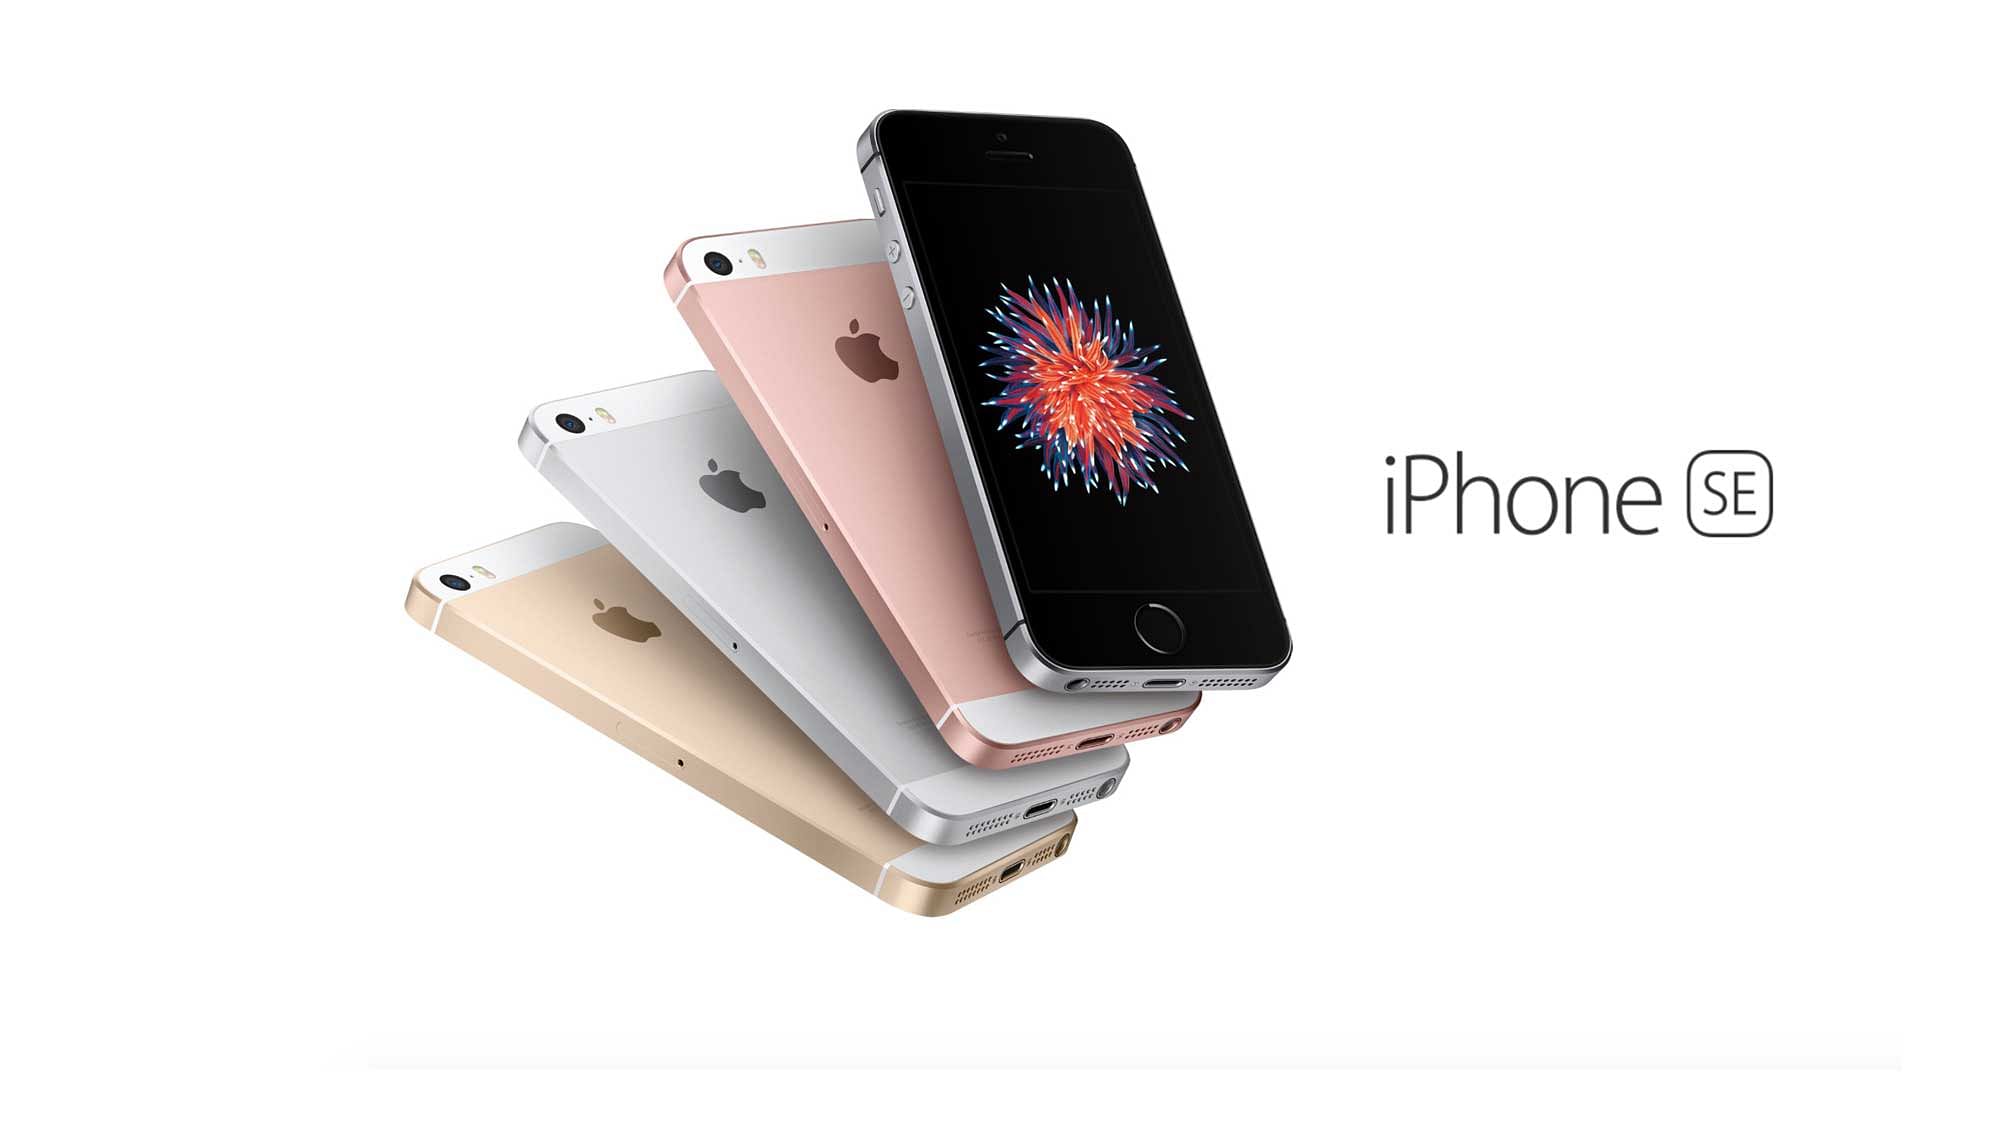 Apple iPhone SE. (Photo: Apple)